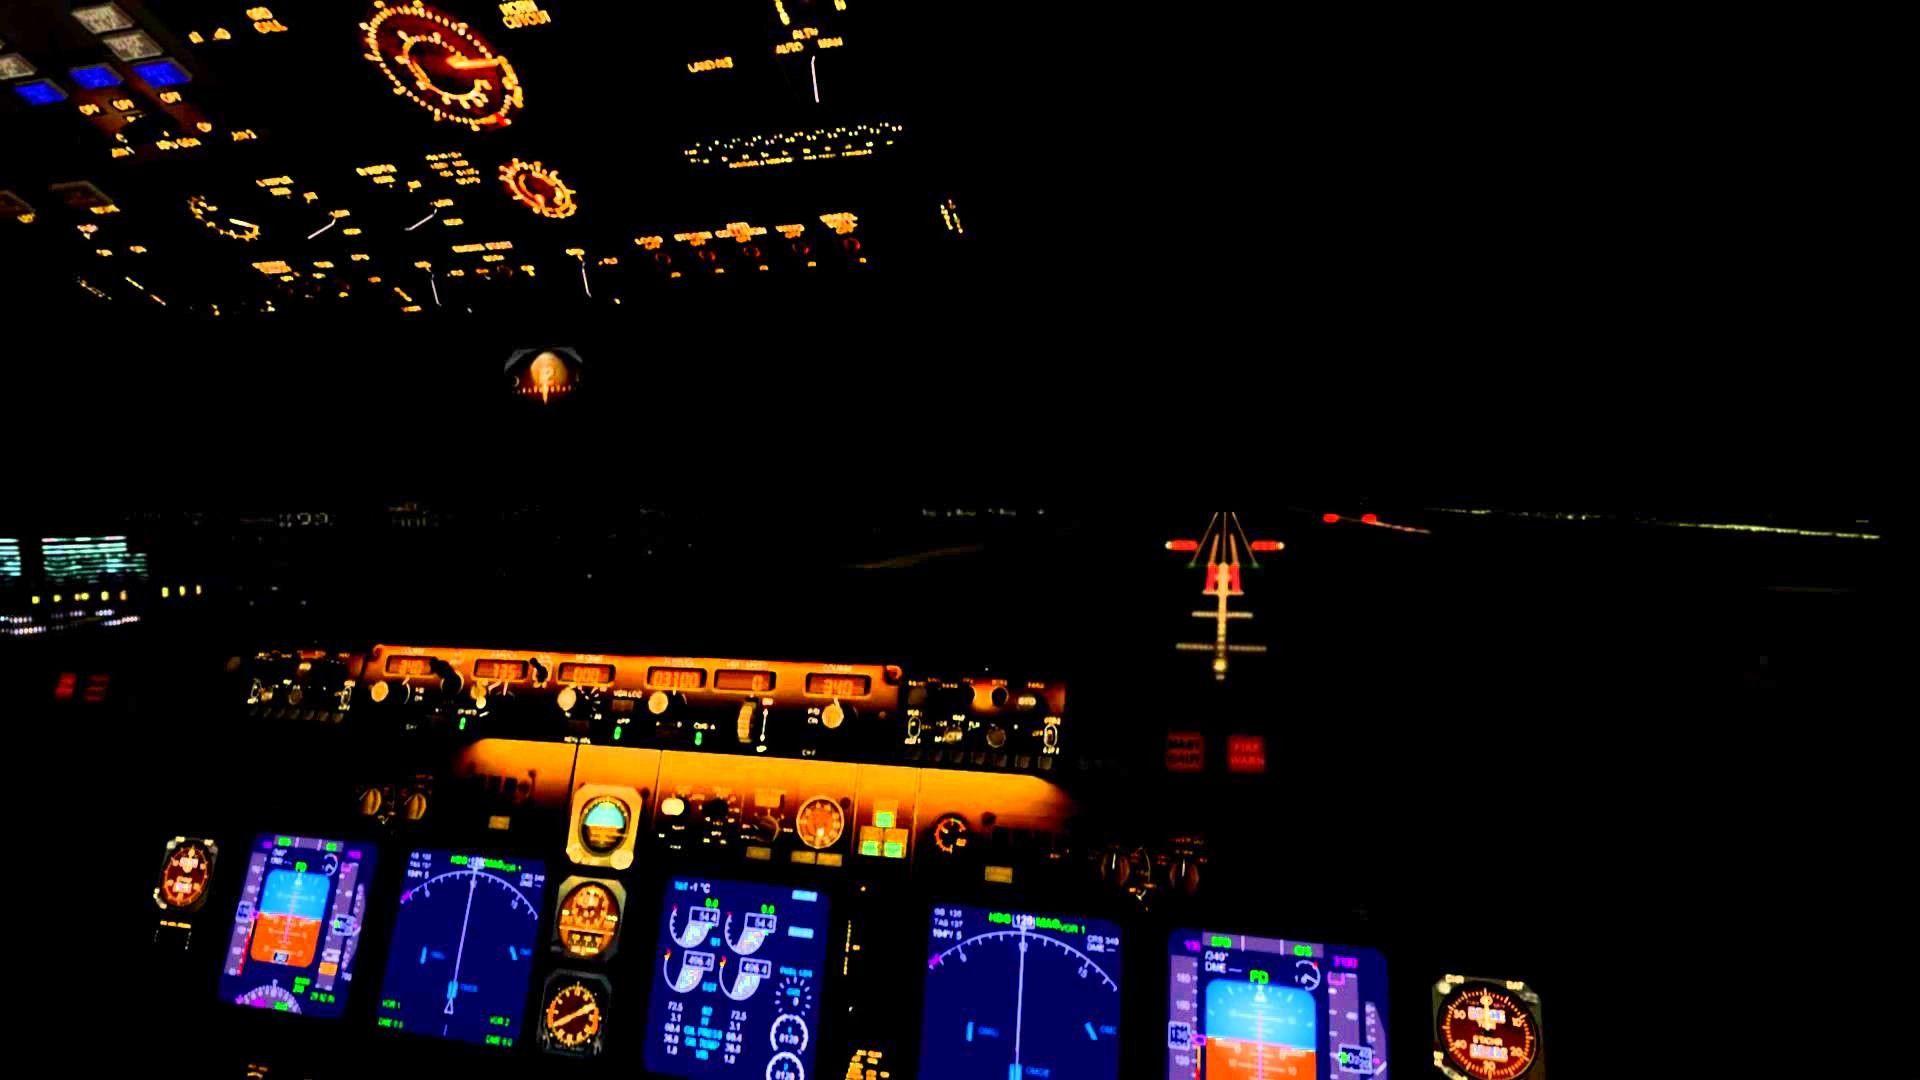 Boeing 787 Cockpit Wallpaper